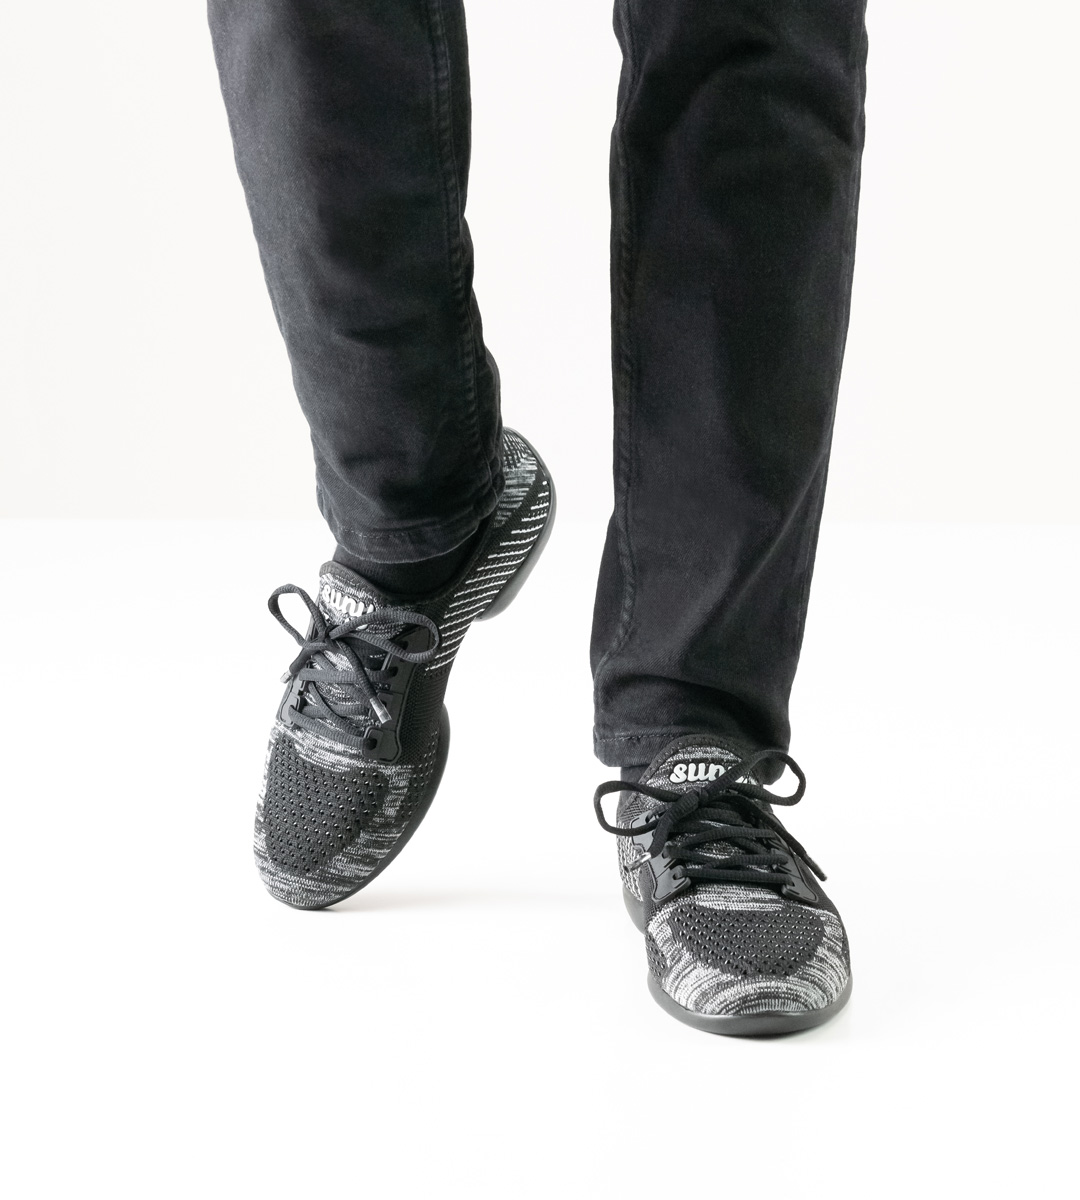 Suny Mens Dance Sneakers in Black-Grey for Salsa